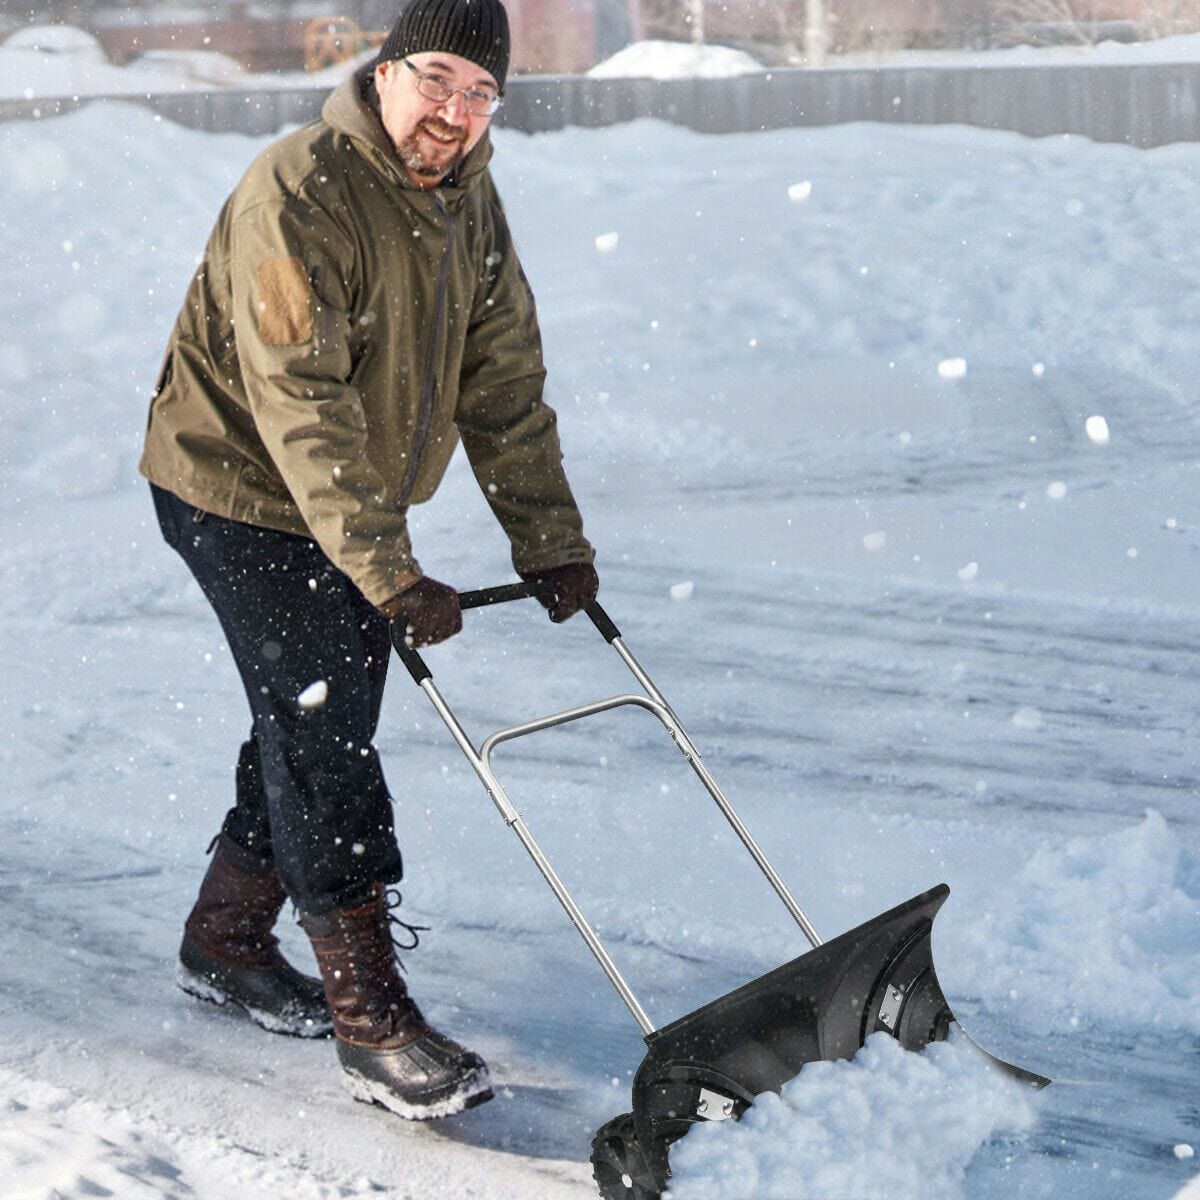 Ergonomic Snow Pusher Shovel With Wheels - Merchandise Plug